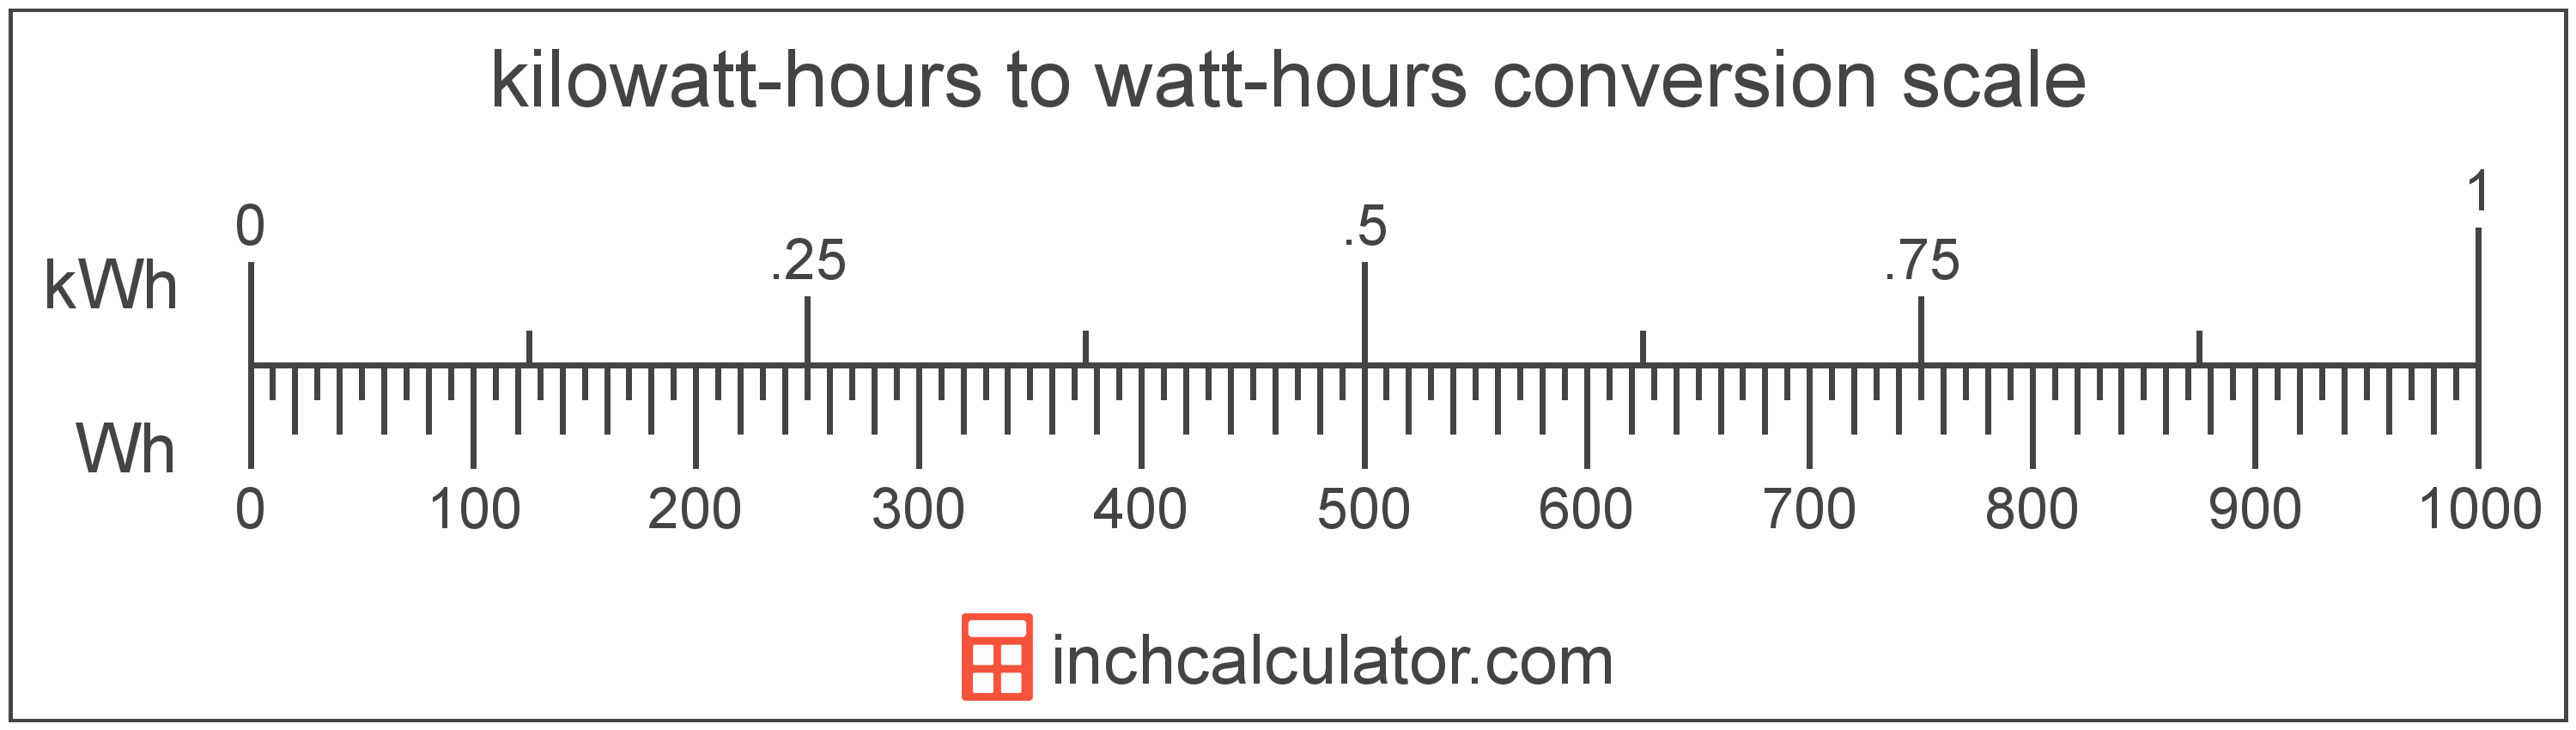 conversion scale showing kilowatt-hours and equivalent watt-hours energy values